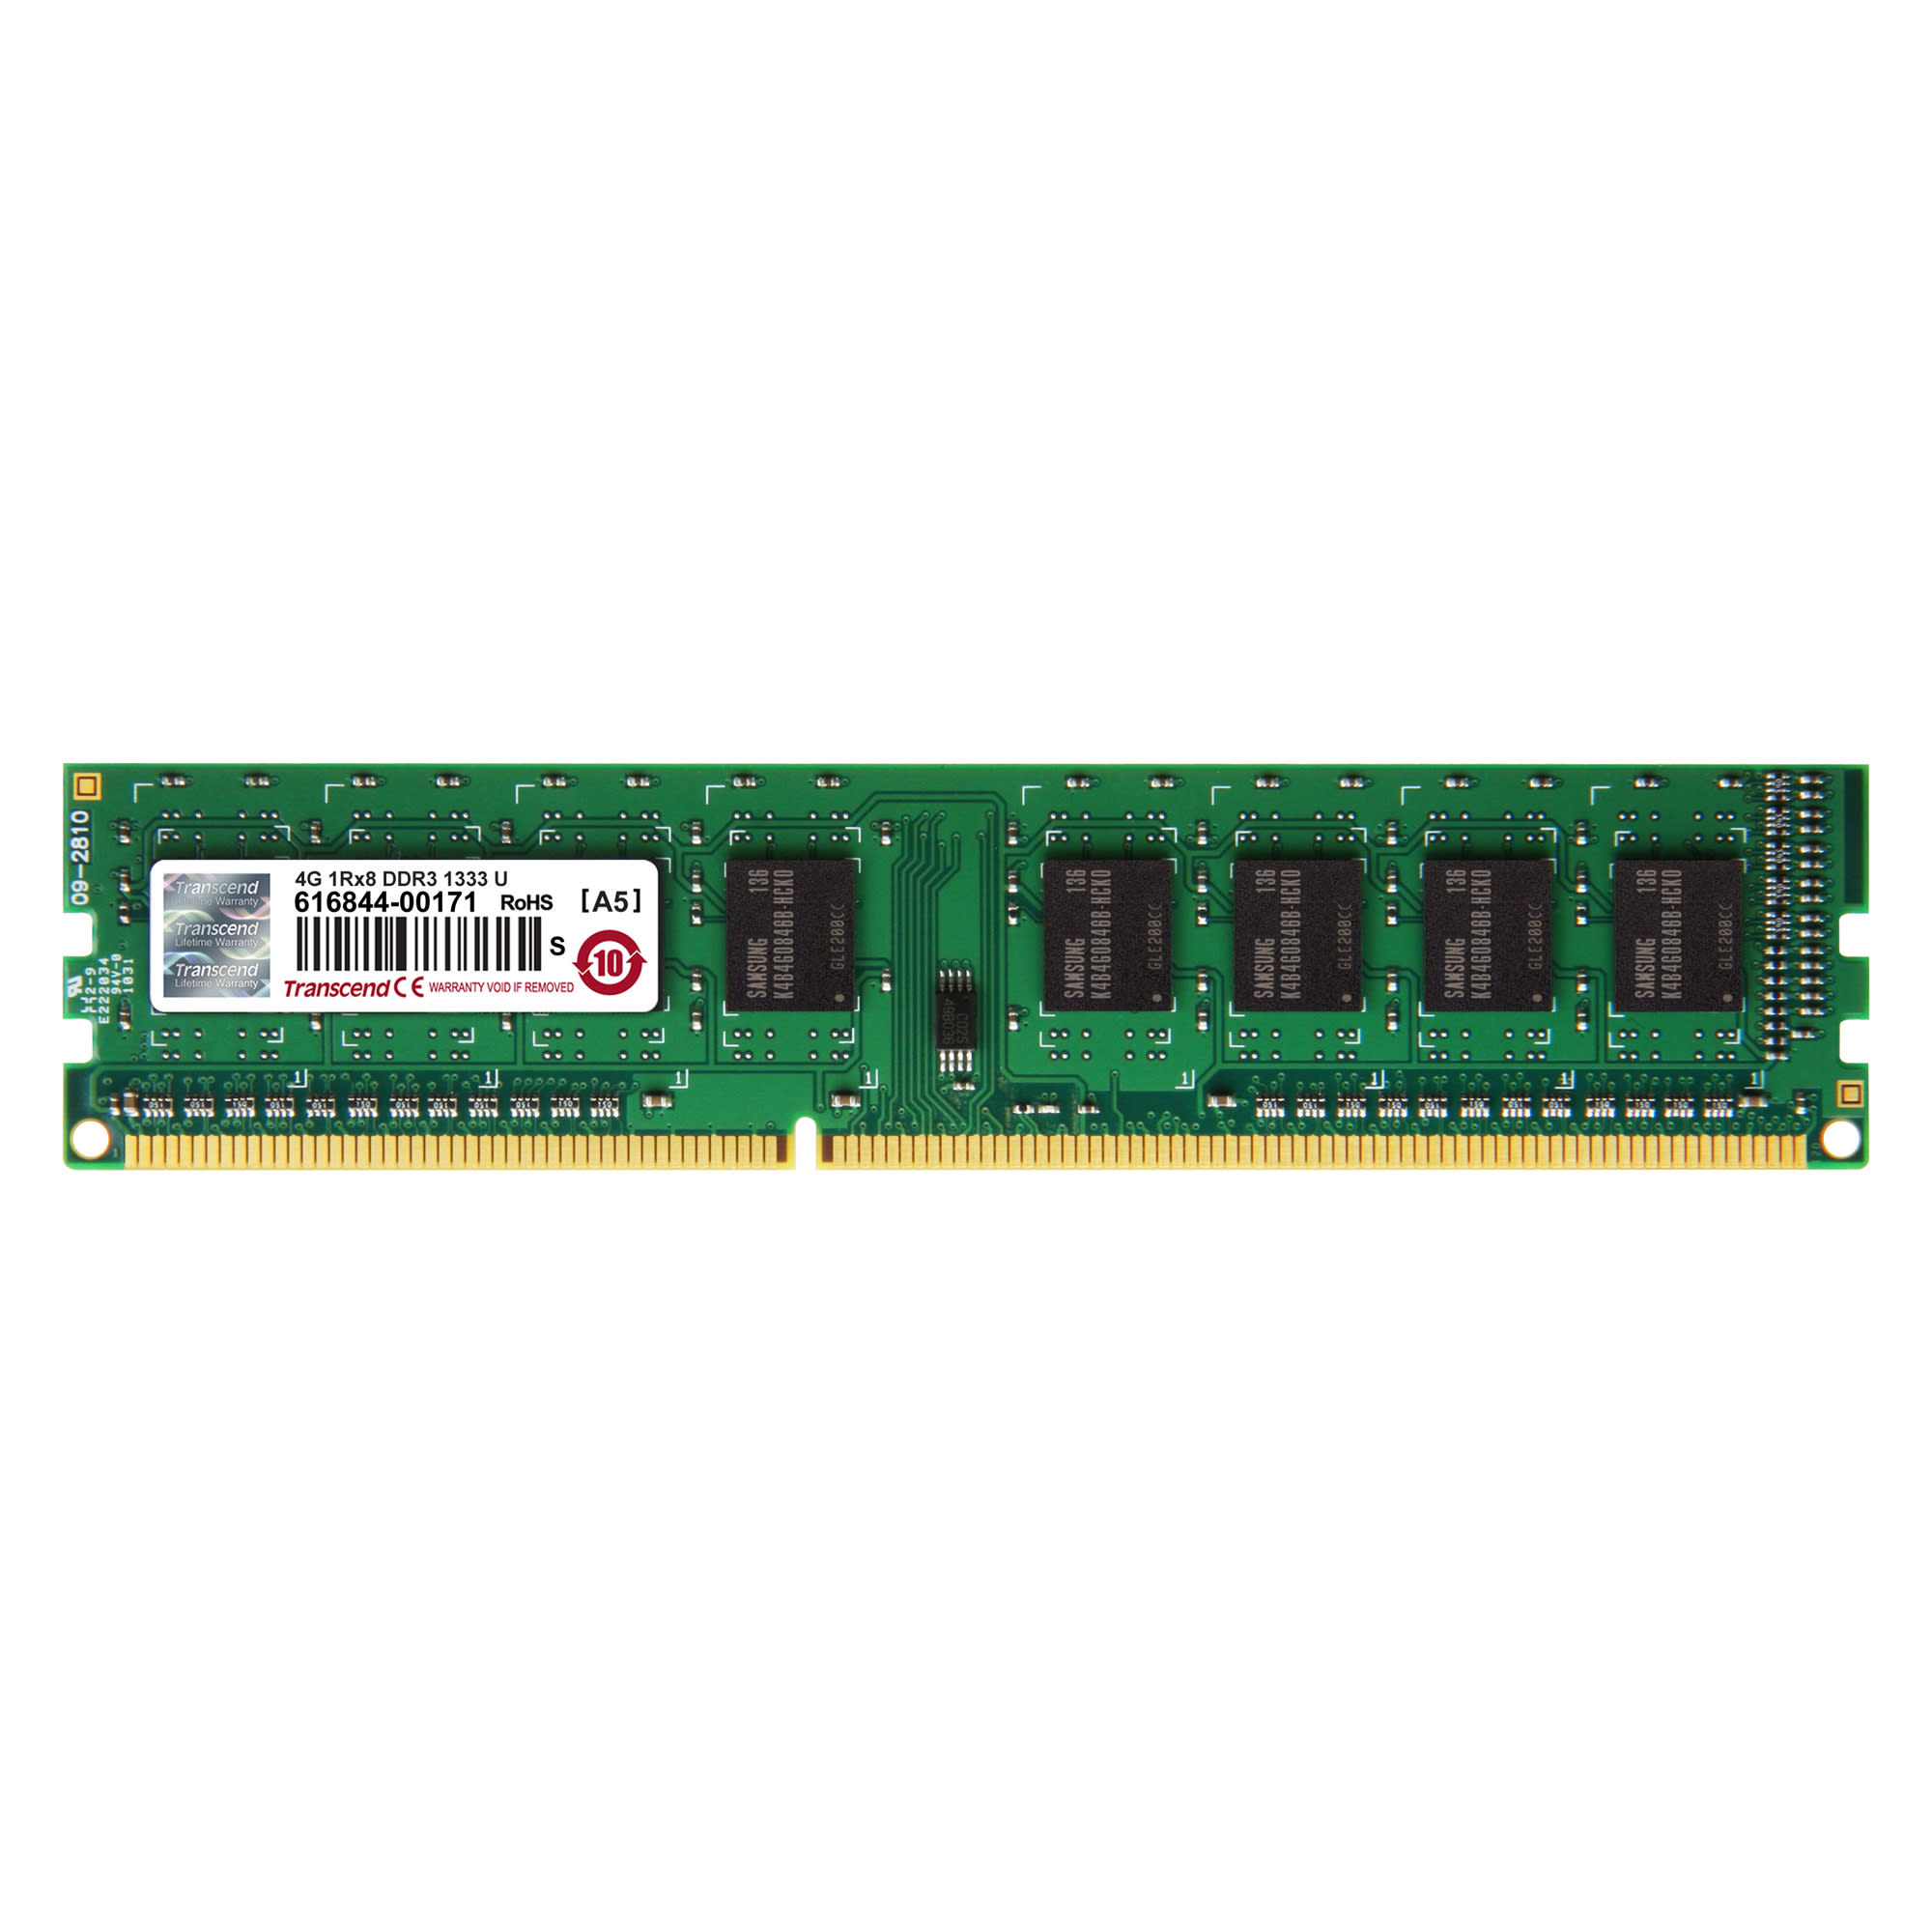 TS512MLK64V6H DDR3 240PIN Non ECC (1.5 V Standard Product) | Transcend Information | MISUMI